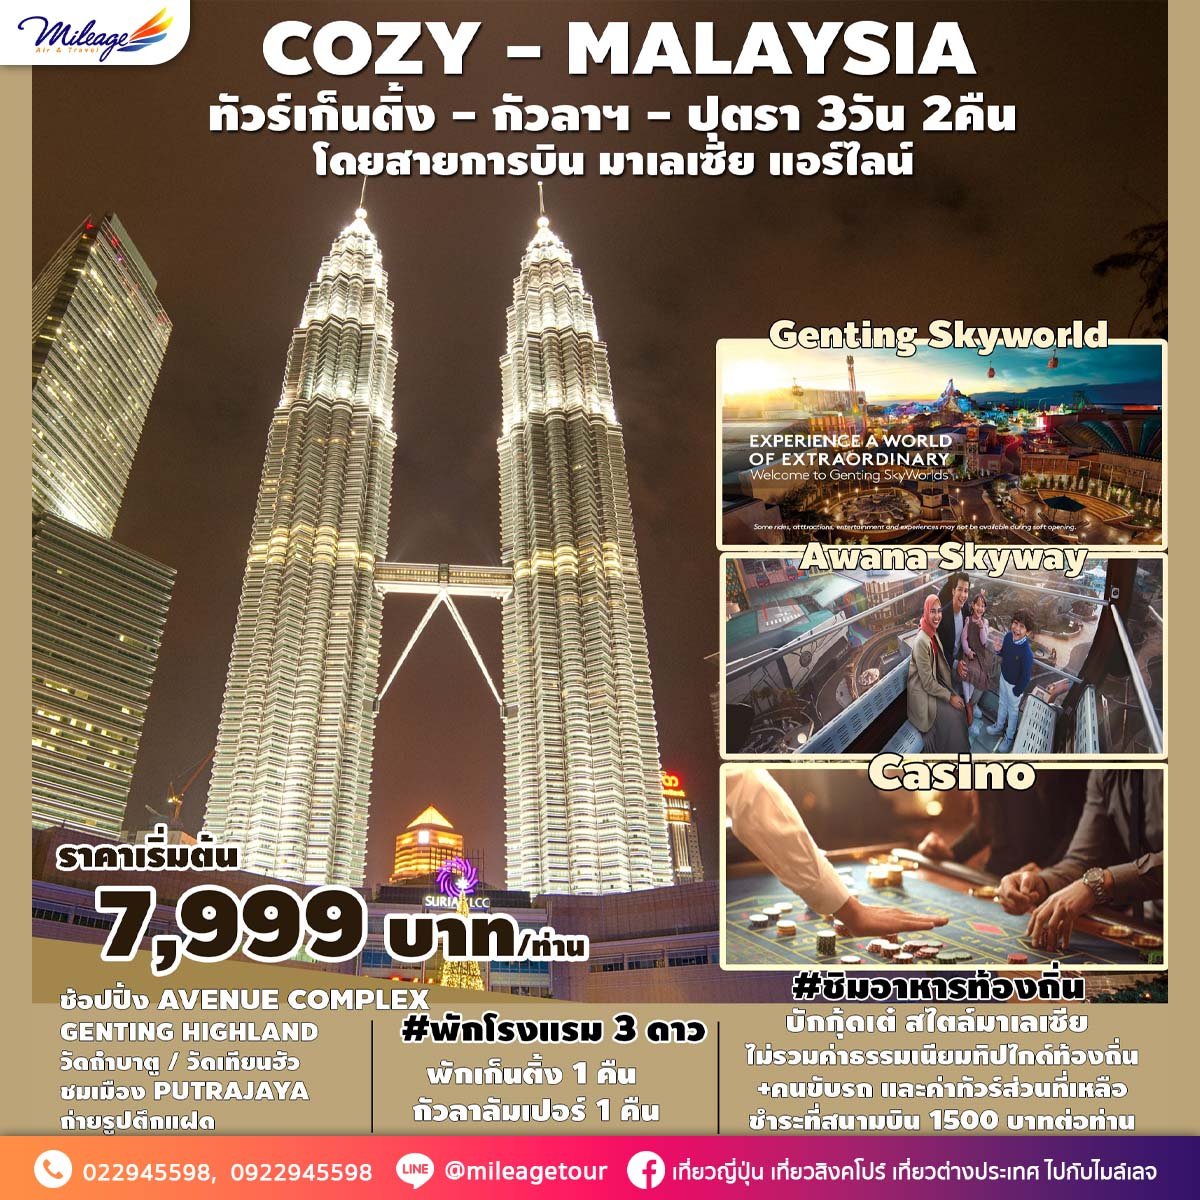 COZY MALAYSIA ทัวร์เก็นติ้ง กัวลาฯ ปุตรา  3 วัน  2 คืน โดยสายการบิน มาเลเซีย แอร์ไลน์ เดินทางถึ้งเดือน พฤษภาคม 2567